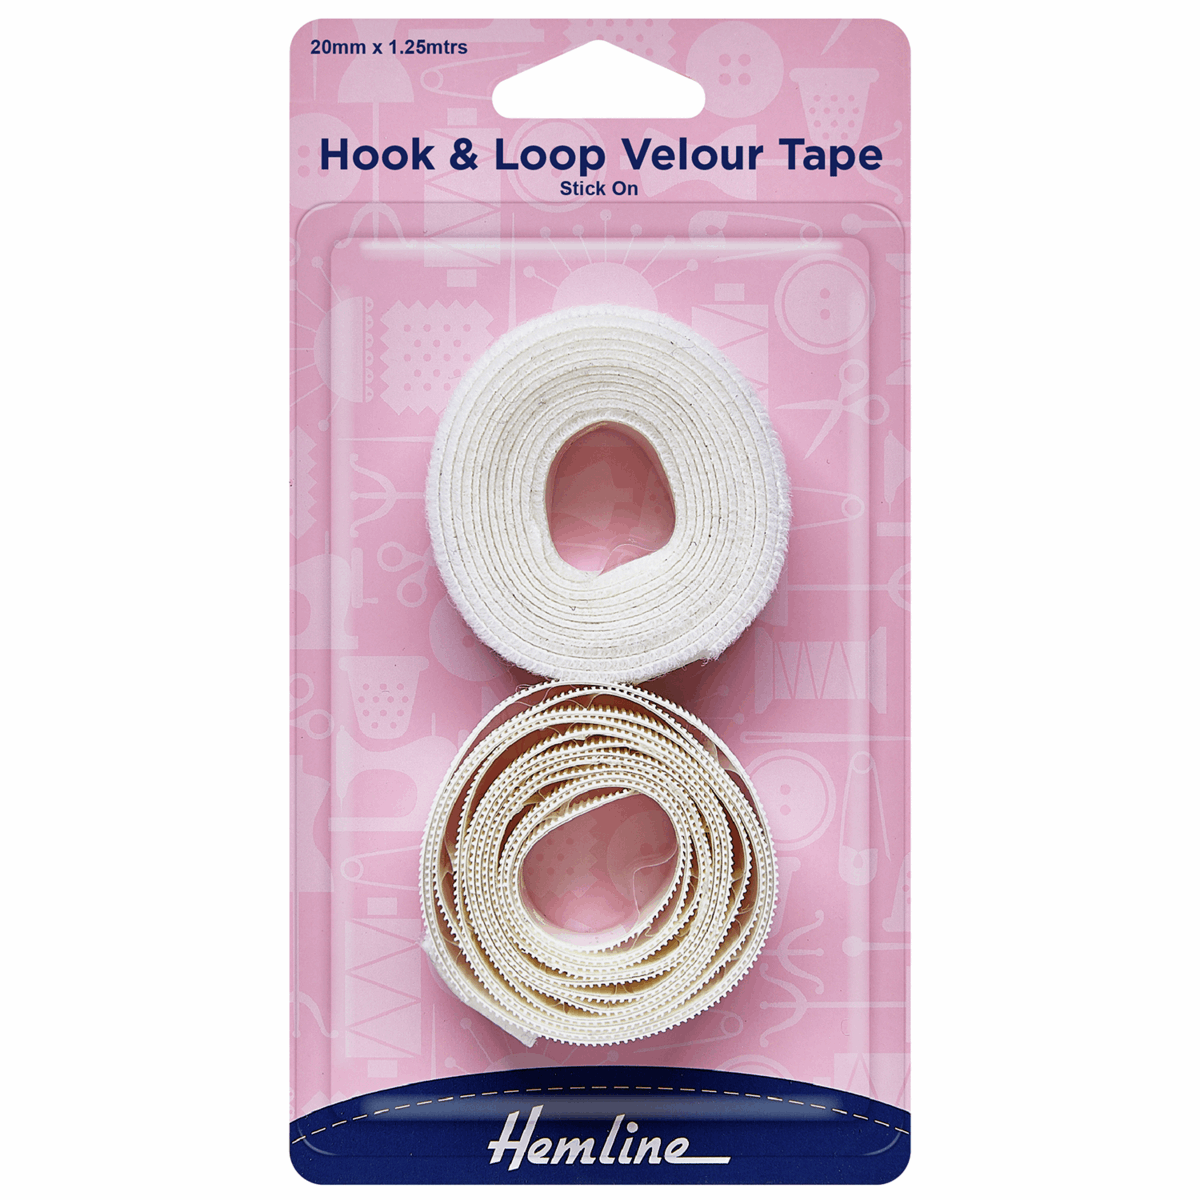 Stick On White Hook & Loop Tape - 1.25m x 20mm